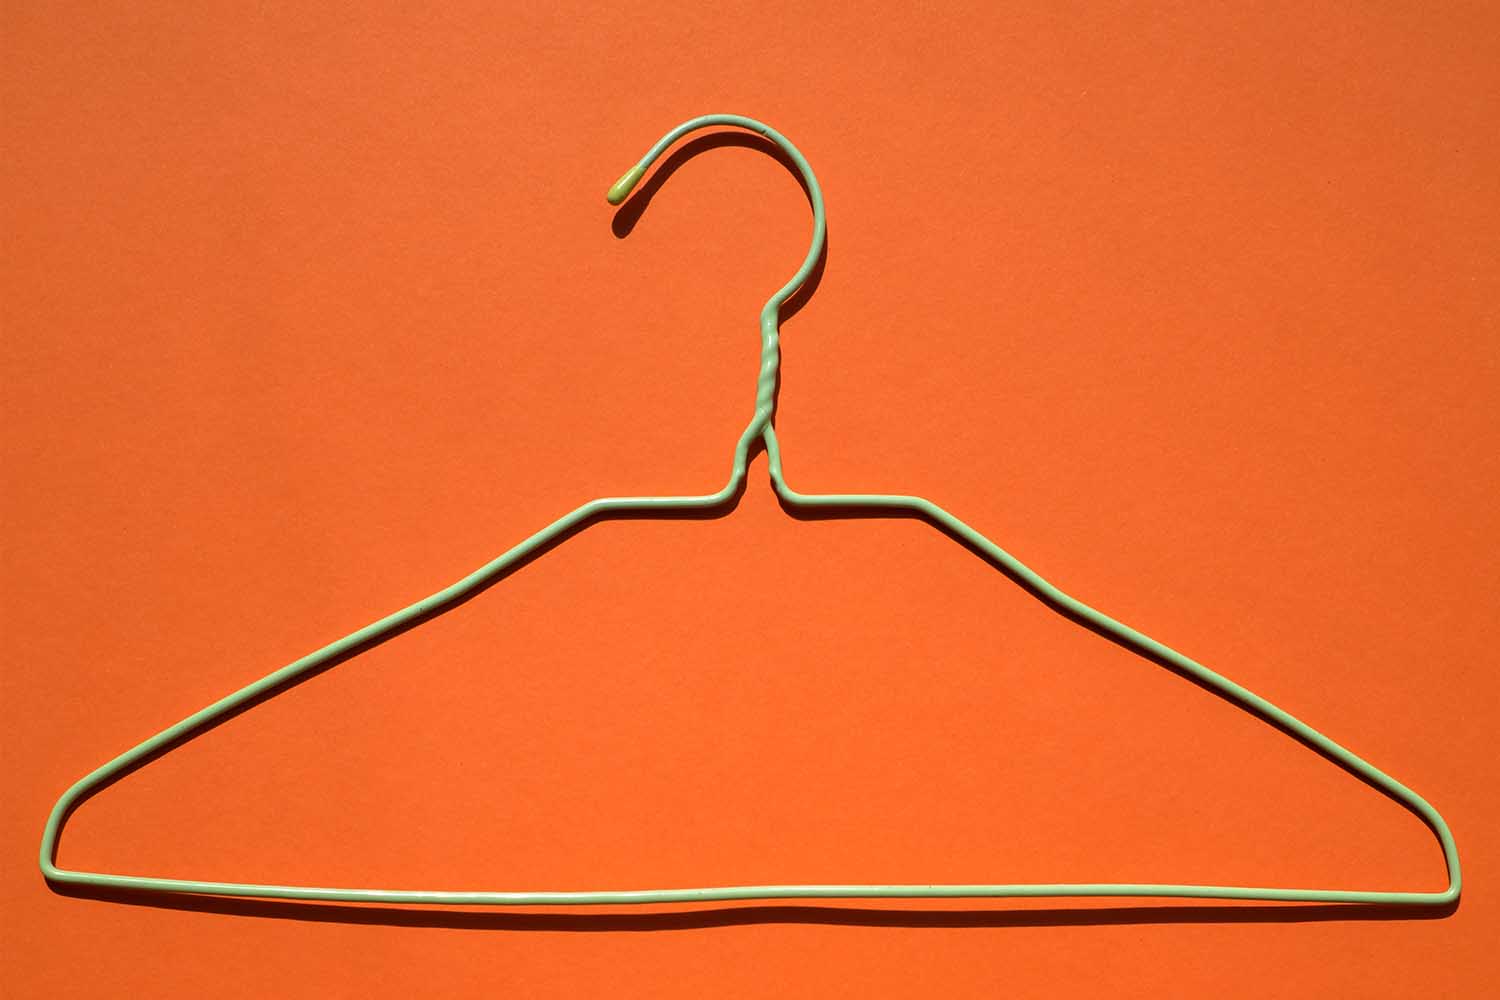 Hanger Challenge: Why People Are Doing It on TikTok - InsideHook